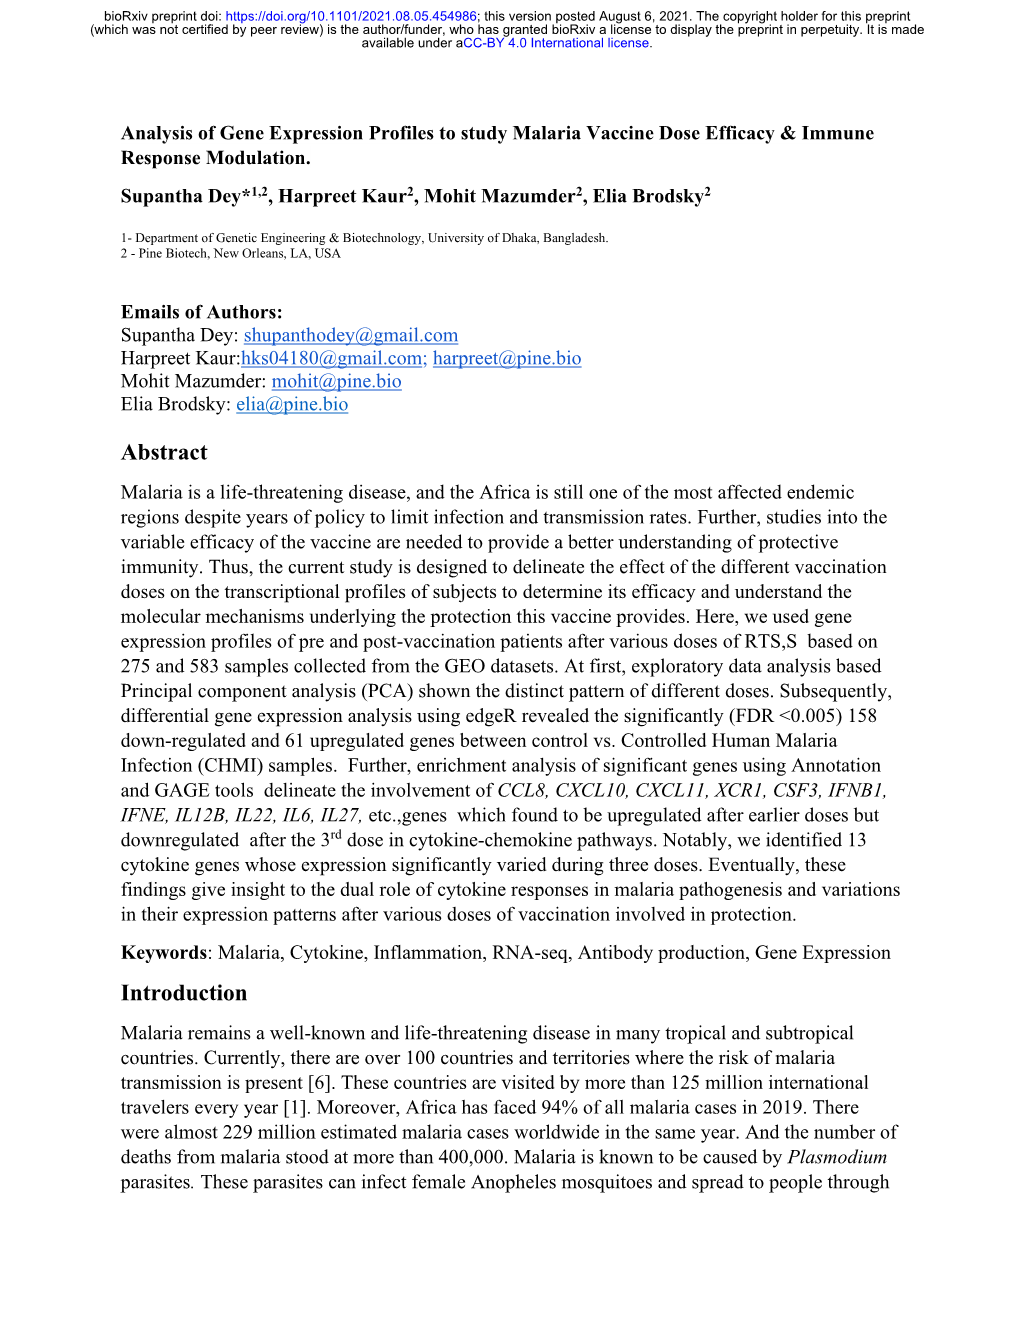 Analysis of Gene Expression Profiles to Study Malaria Vaccine Dose Efficacy & Immune Response Modulation